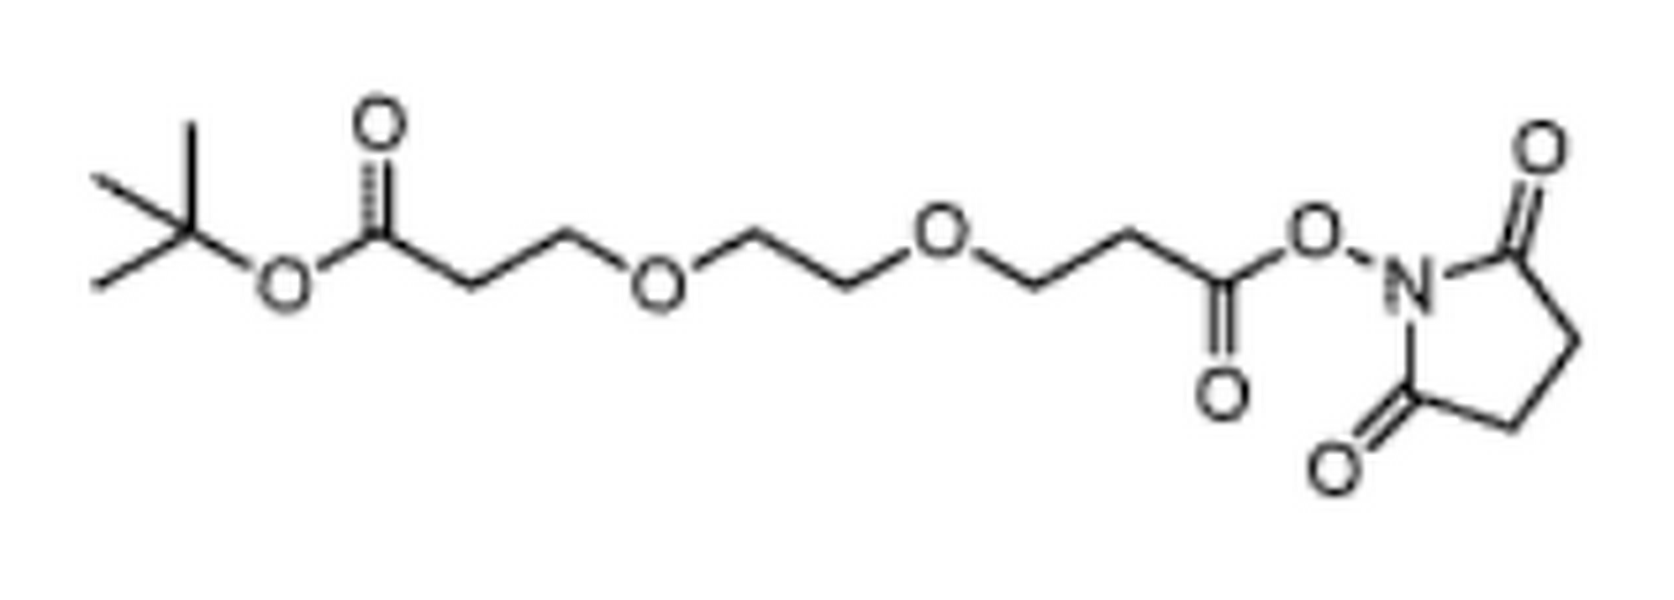 t-Butoxycarbonyl-PEG2-NHS ester